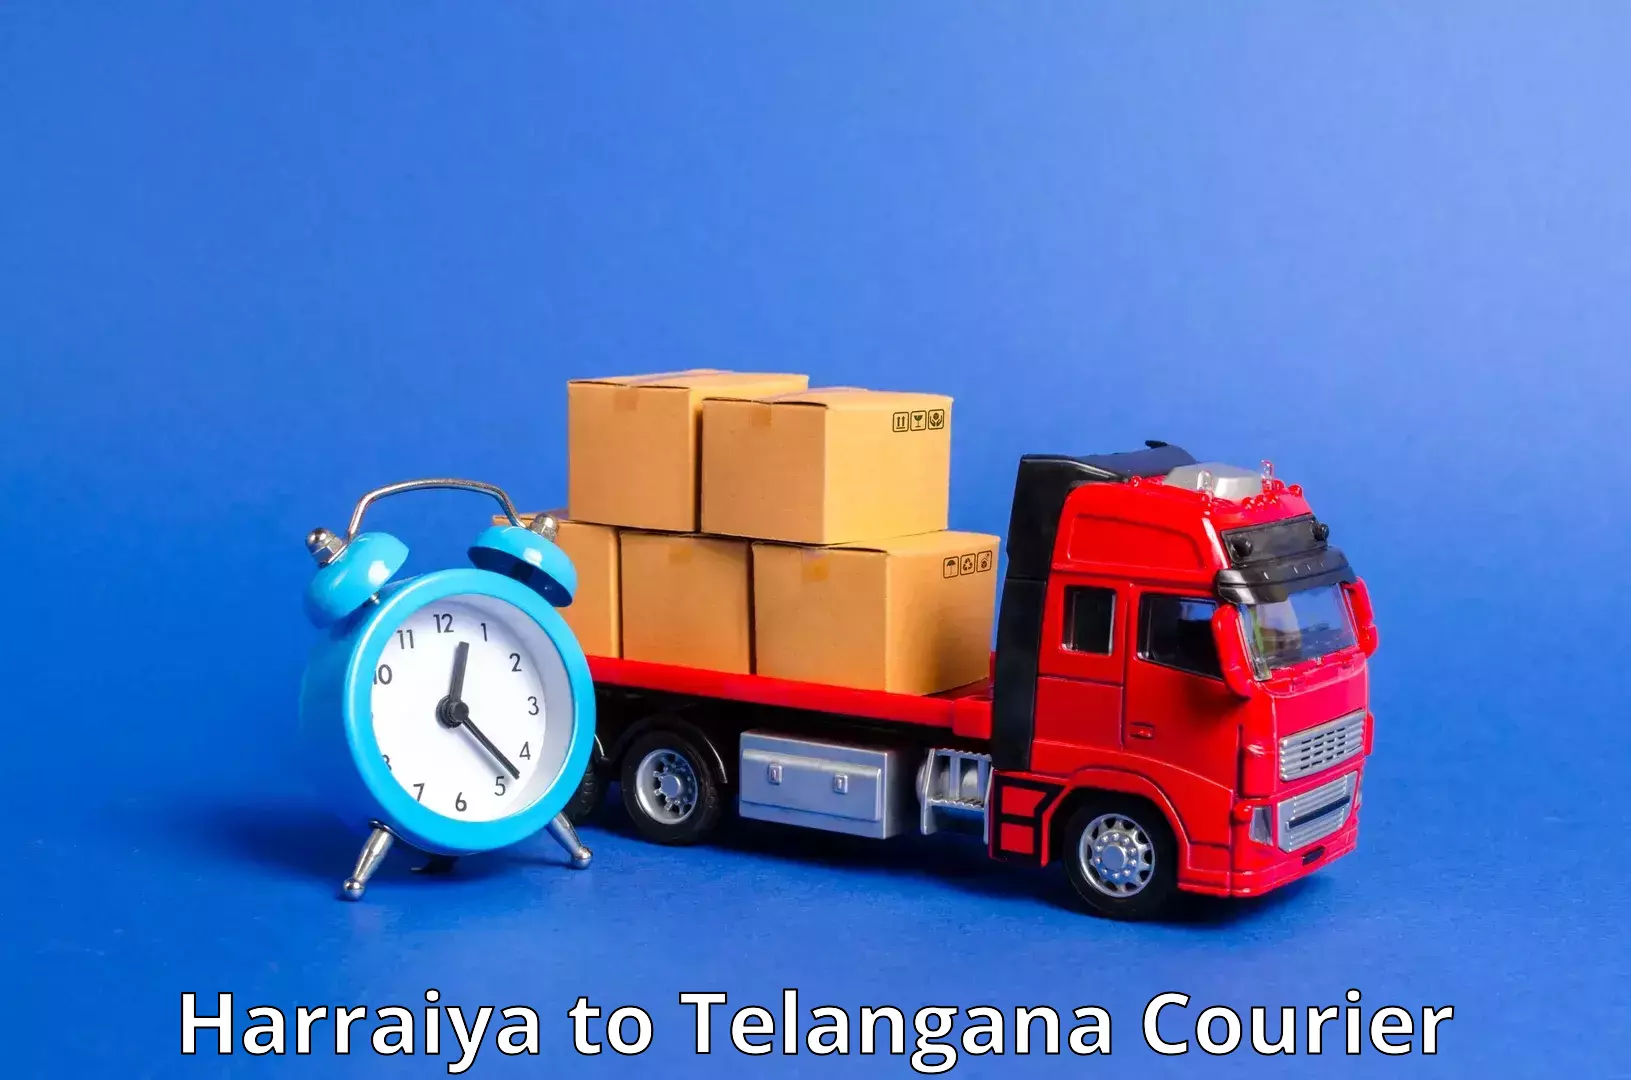 Express package handling in Harraiya to Telangana